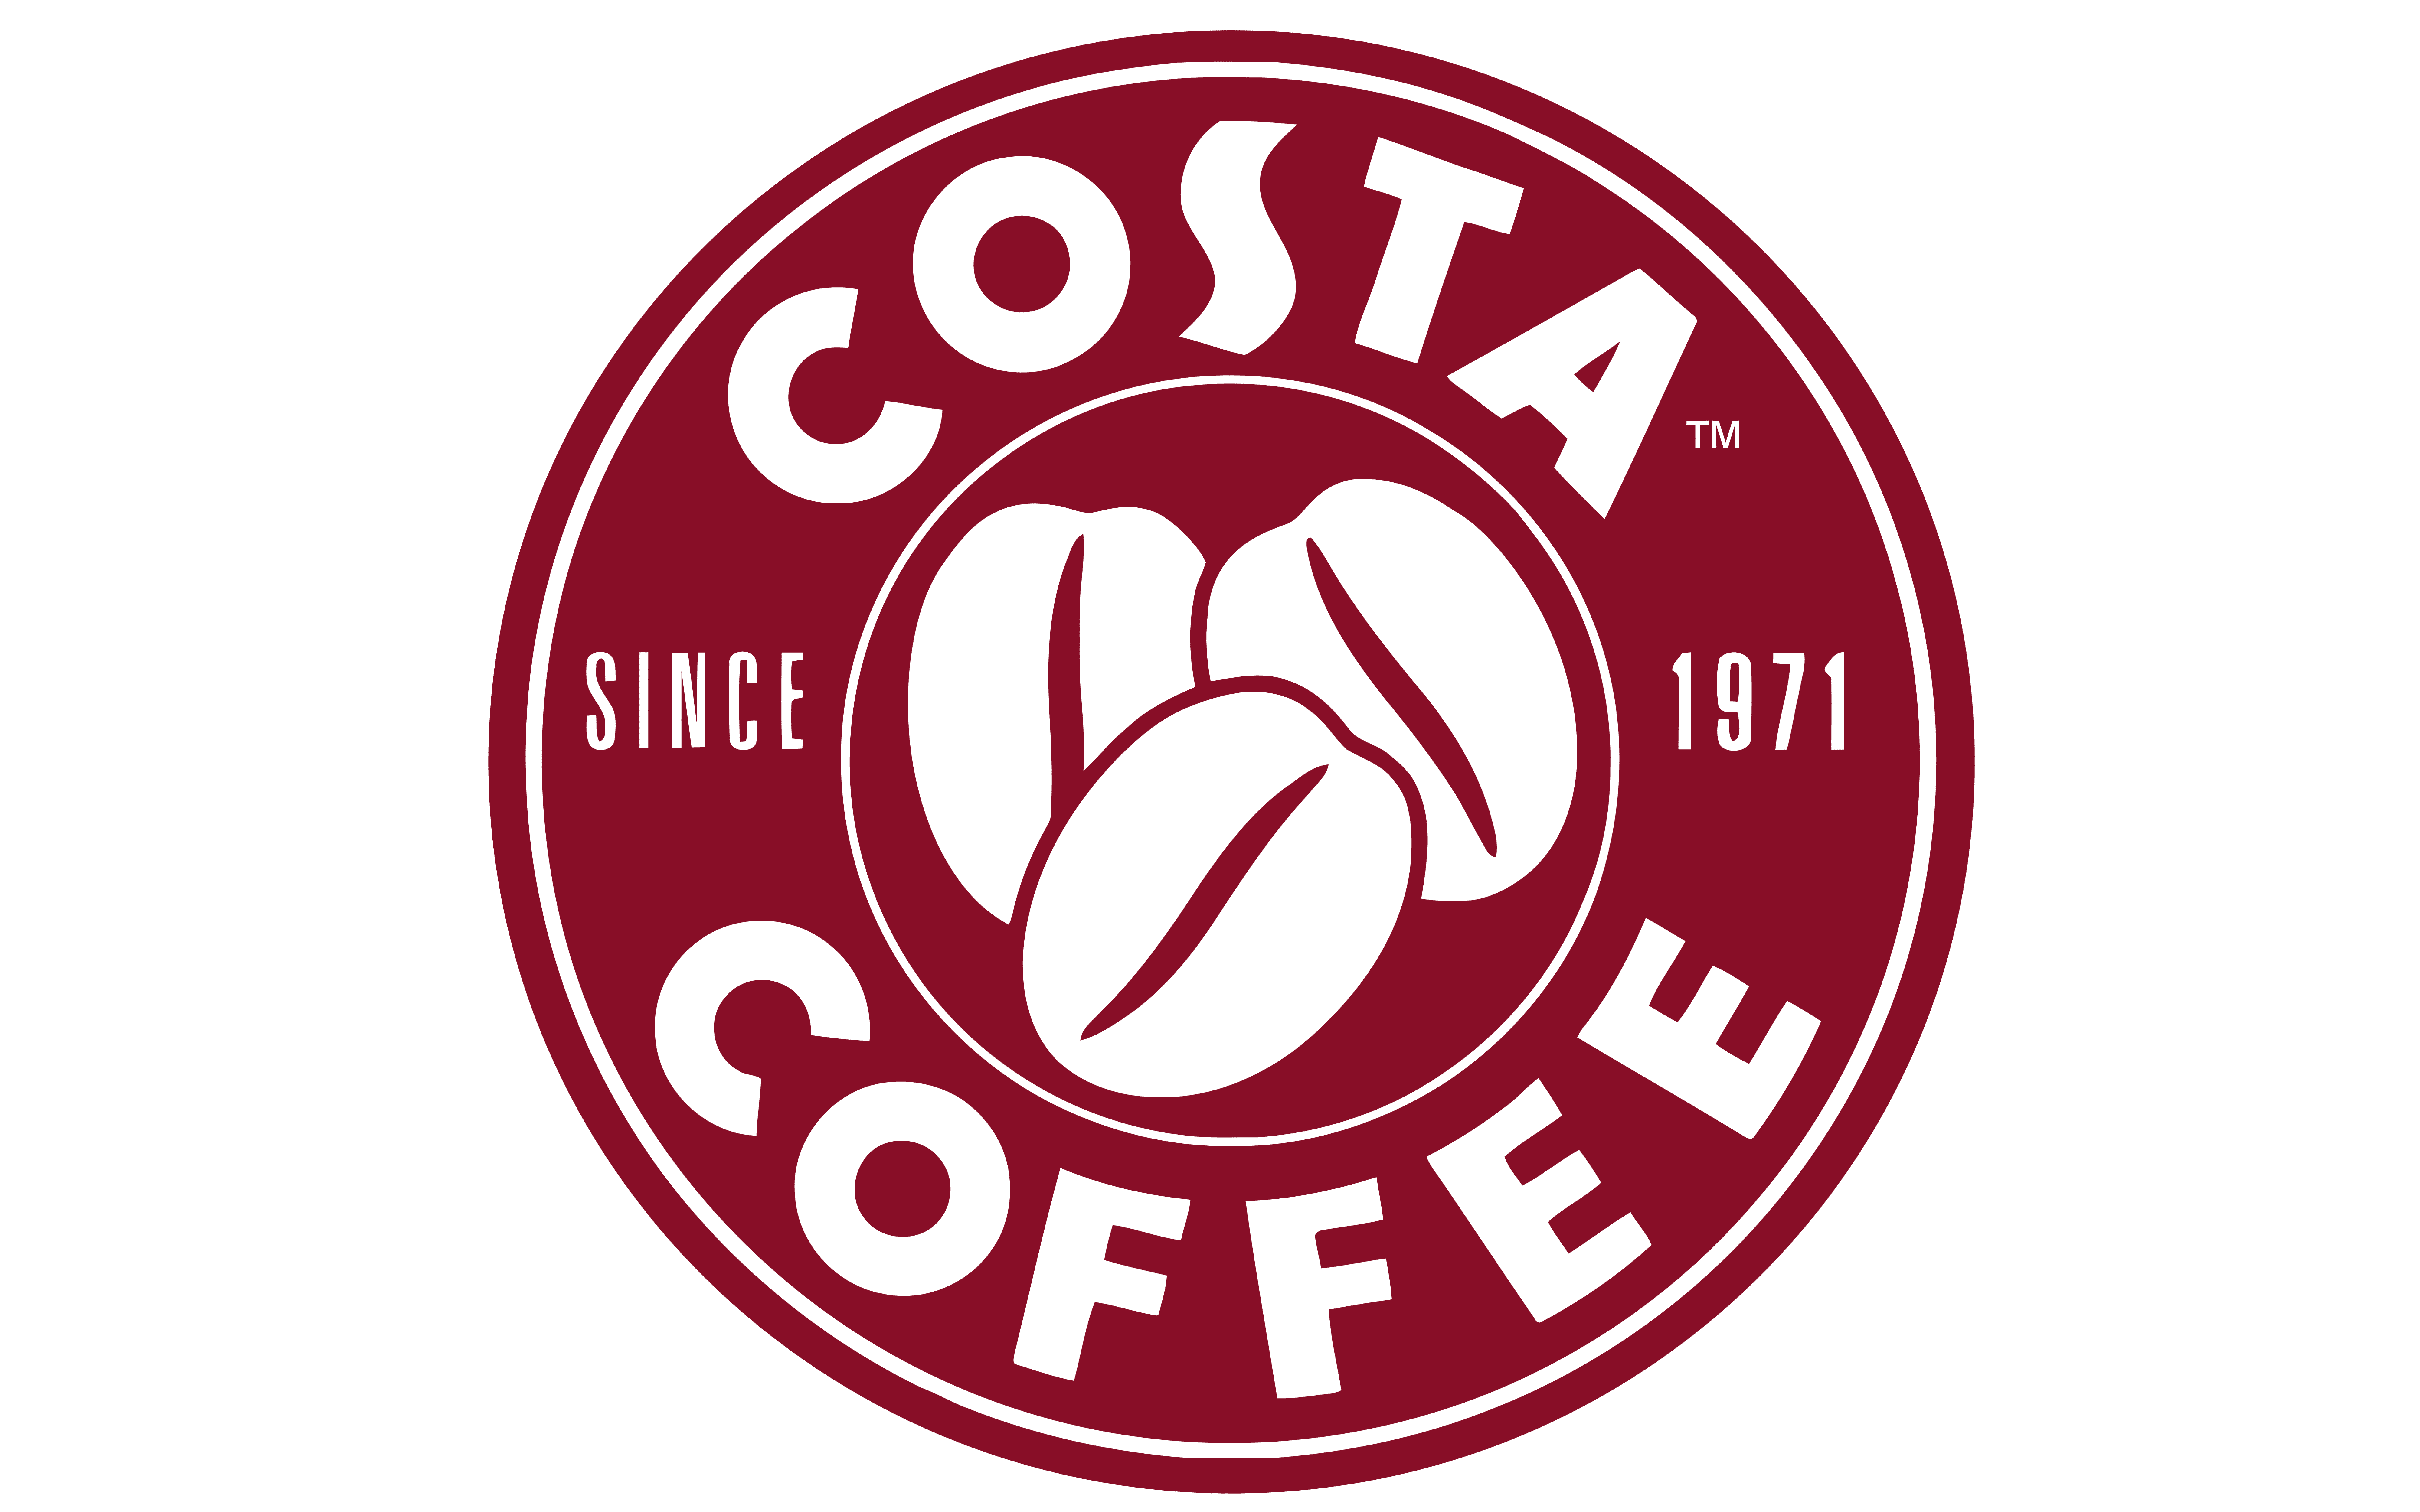 https://1000logos.net/wp-content/uploads/2020/10/Costa-Coffee-Logo.png